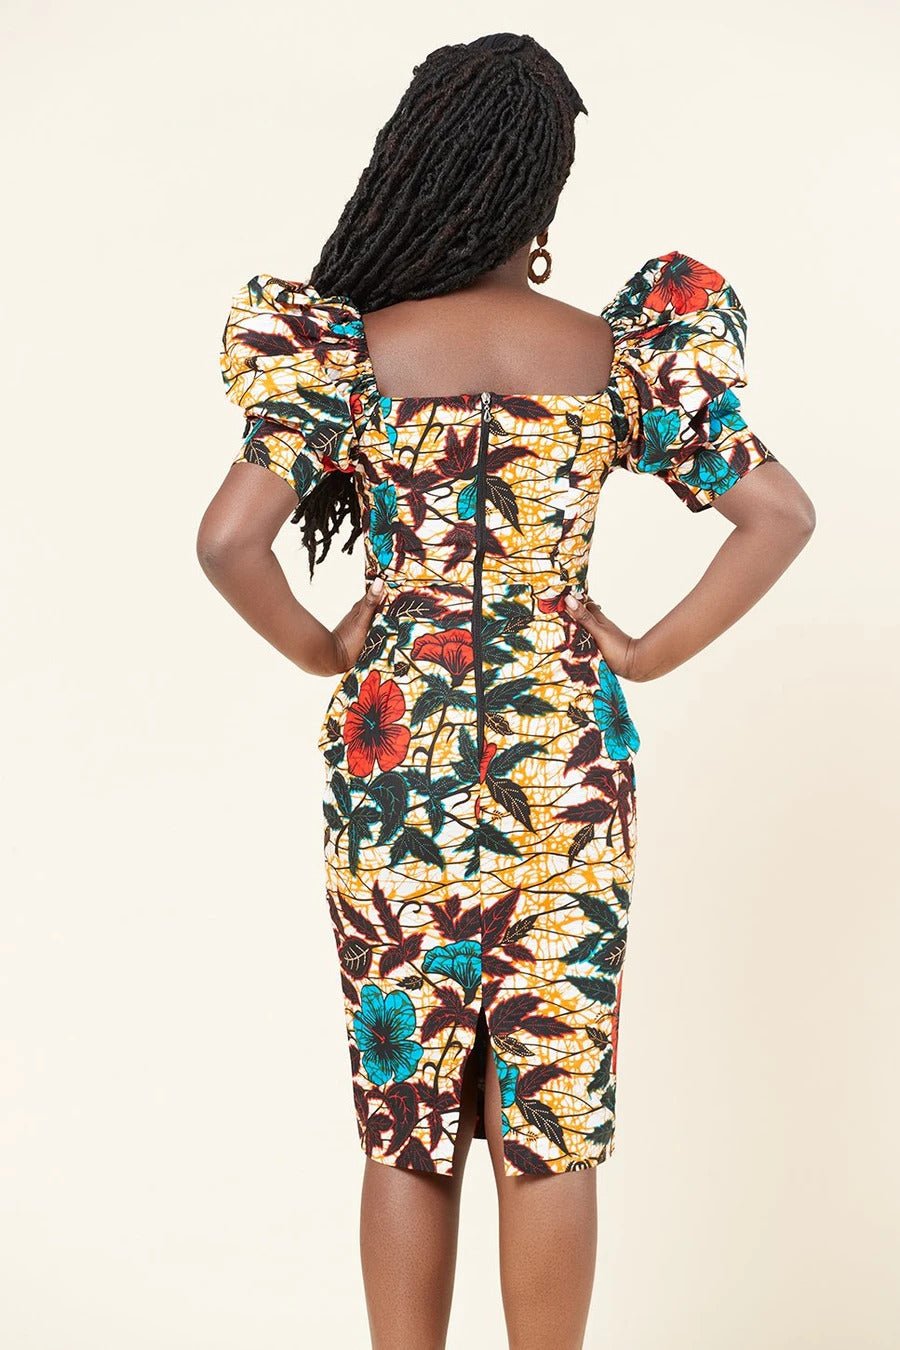 Beige Multi African Ankara Print Plus Size Short Party Dress - Africanclothinghub UK, US, Canada